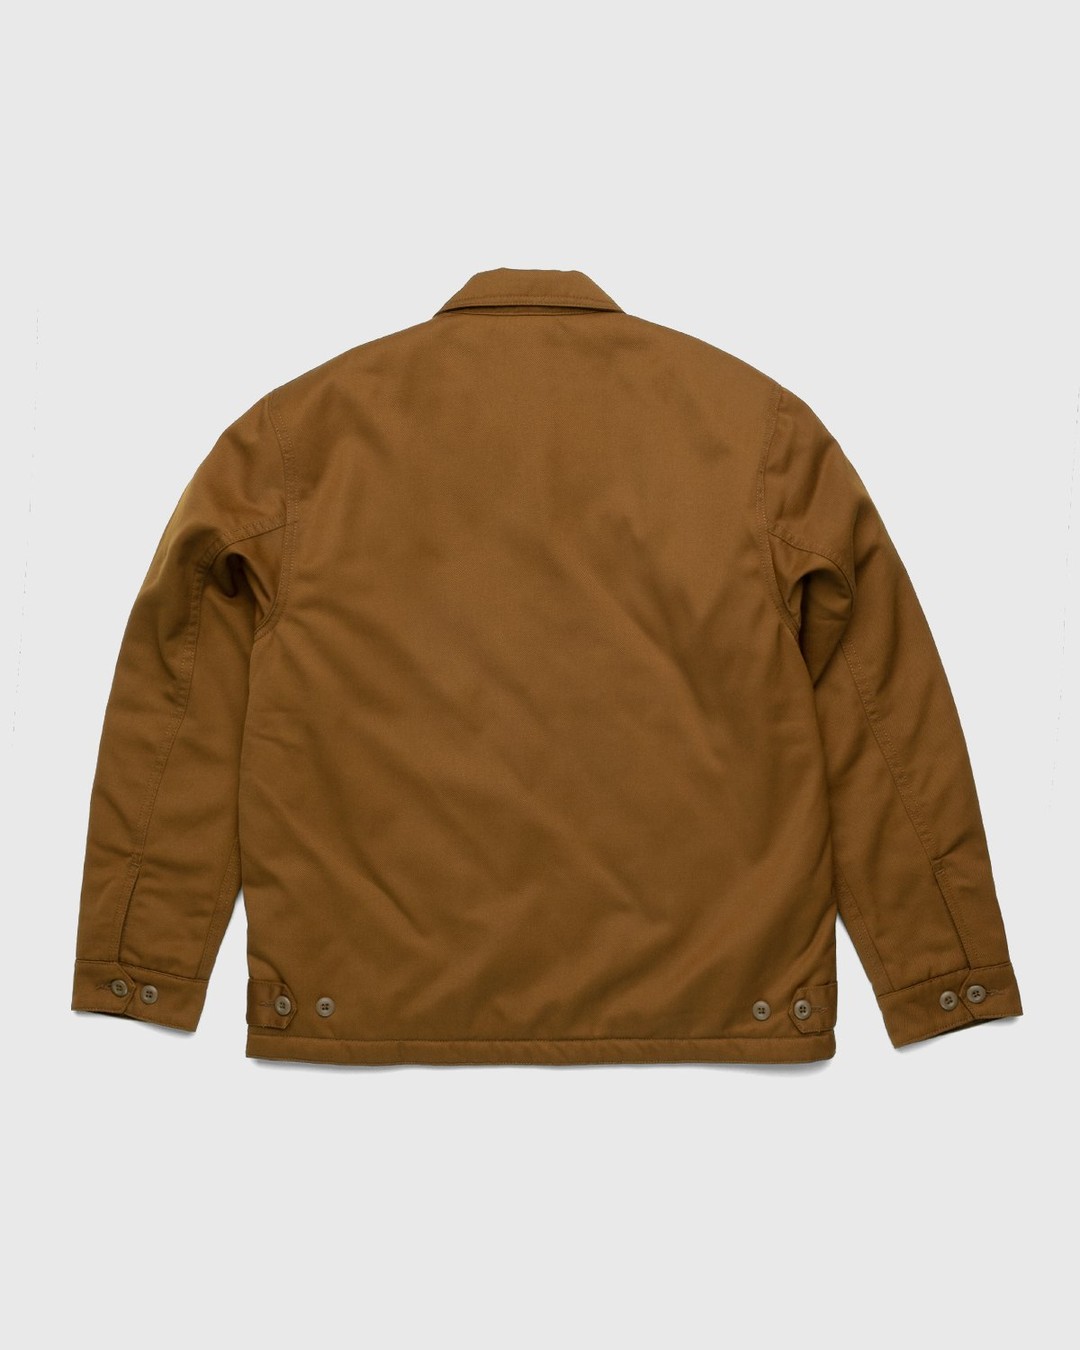 Carhartt WIP – Modular Jacket Tawny Rinsed - Outerwear - Brown - Image 2